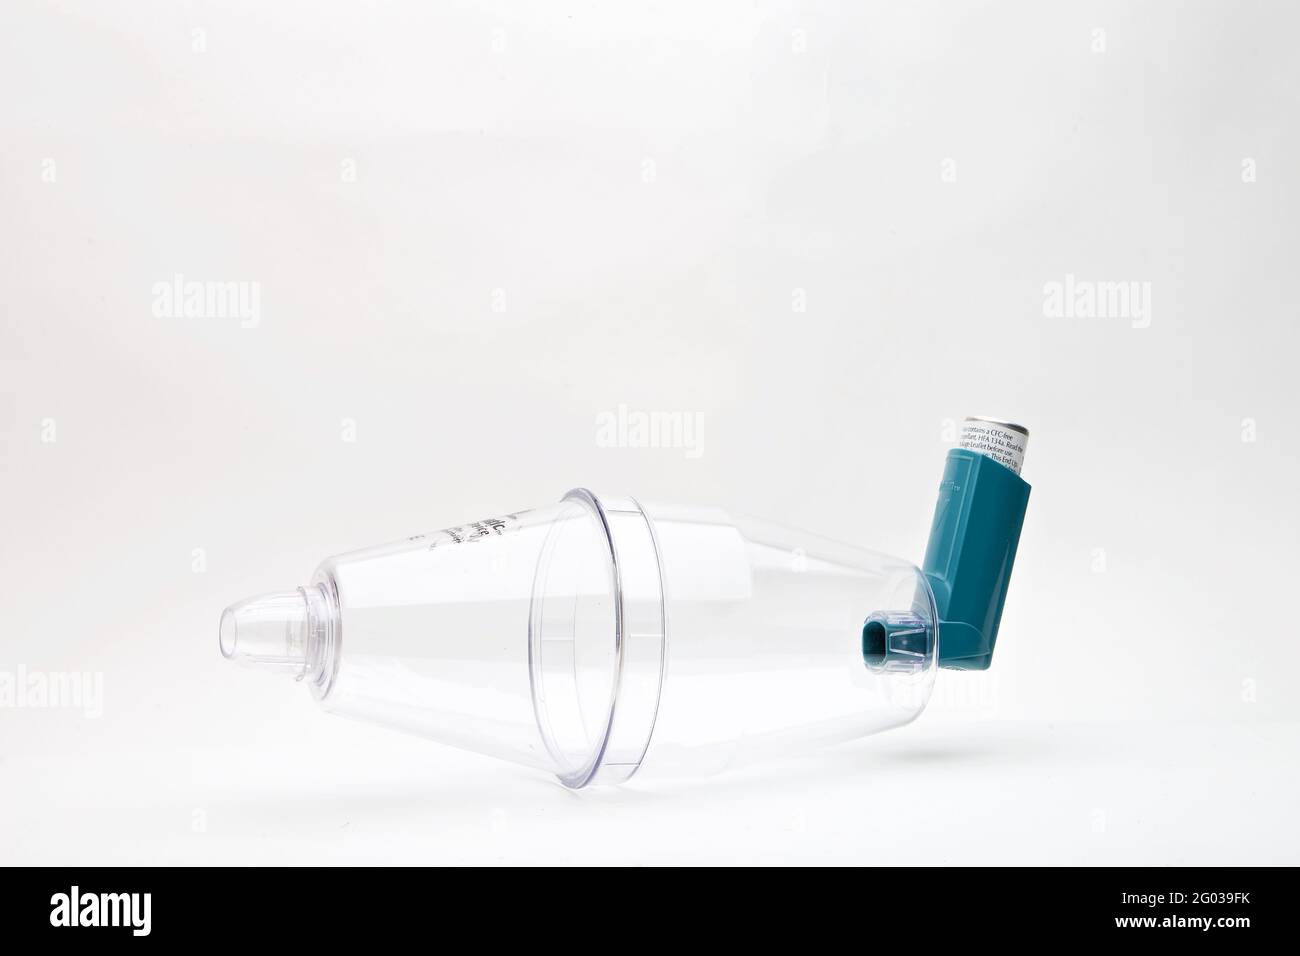 Volumatic Spacer Device and Salbutamol inhaler. Stock Photo